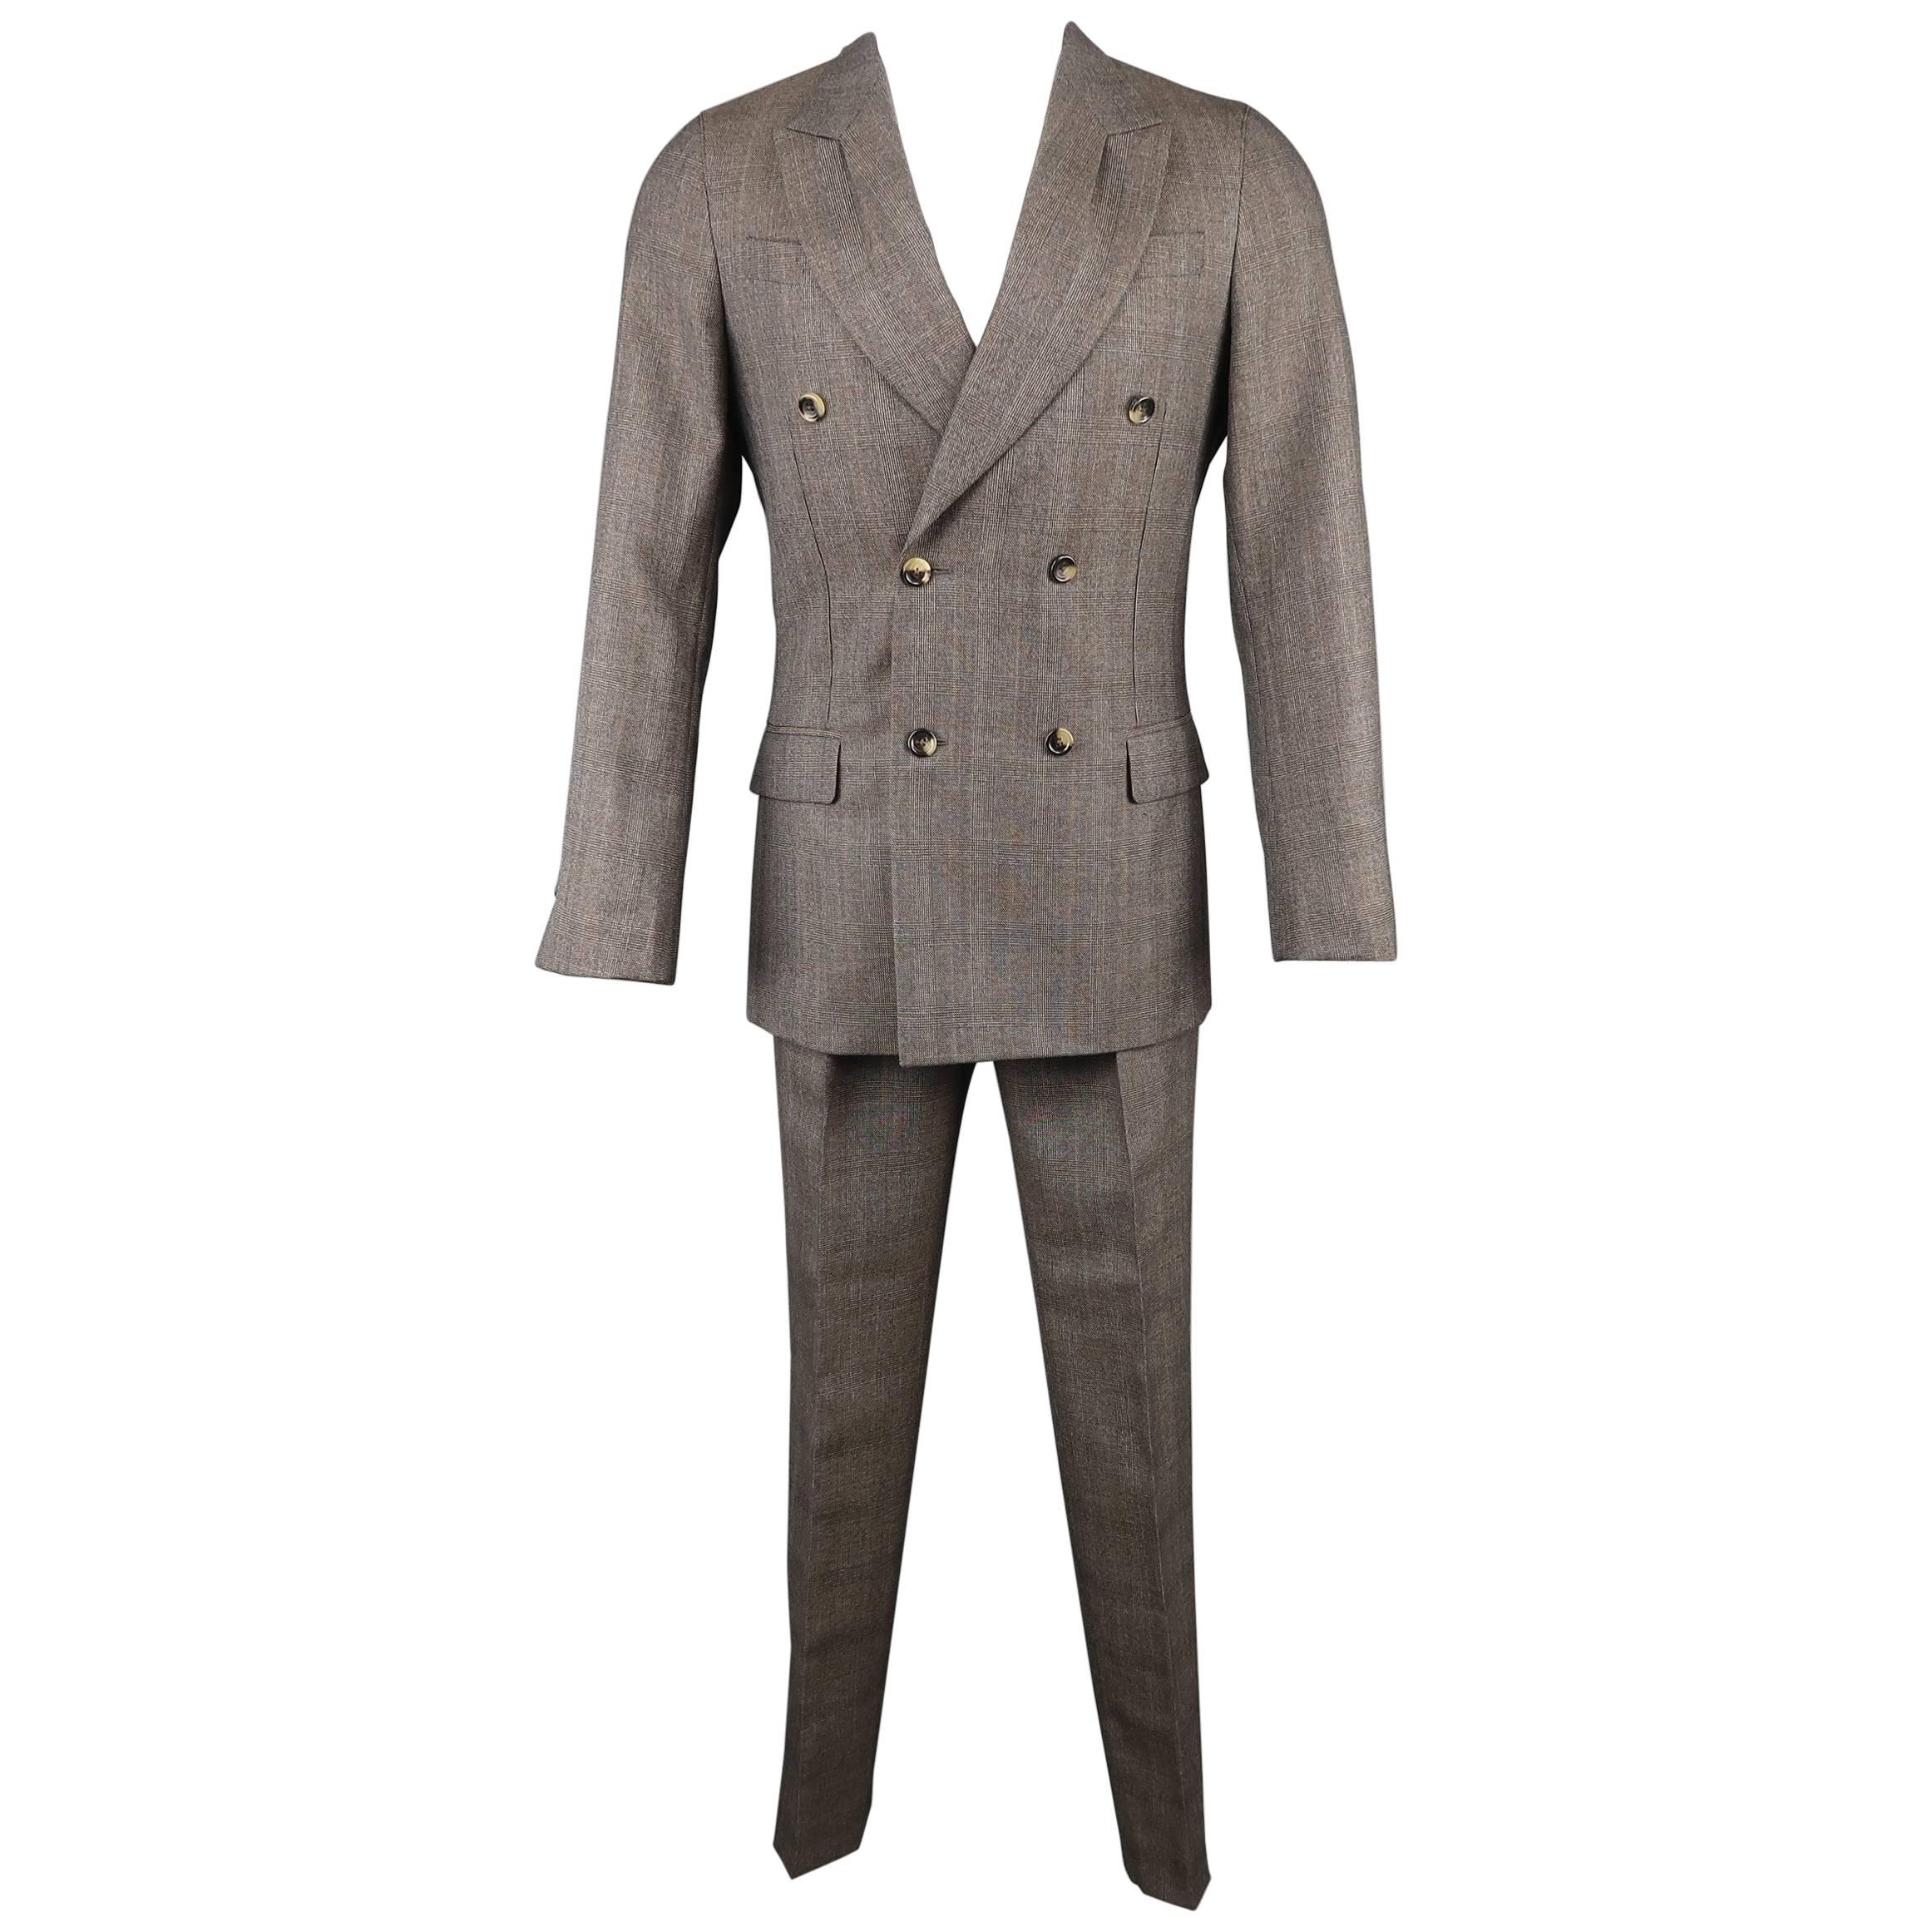 Yves Saint Laurent by Tom Ford Men's Taupe Glenplaid Wool Peak Lapel Suit